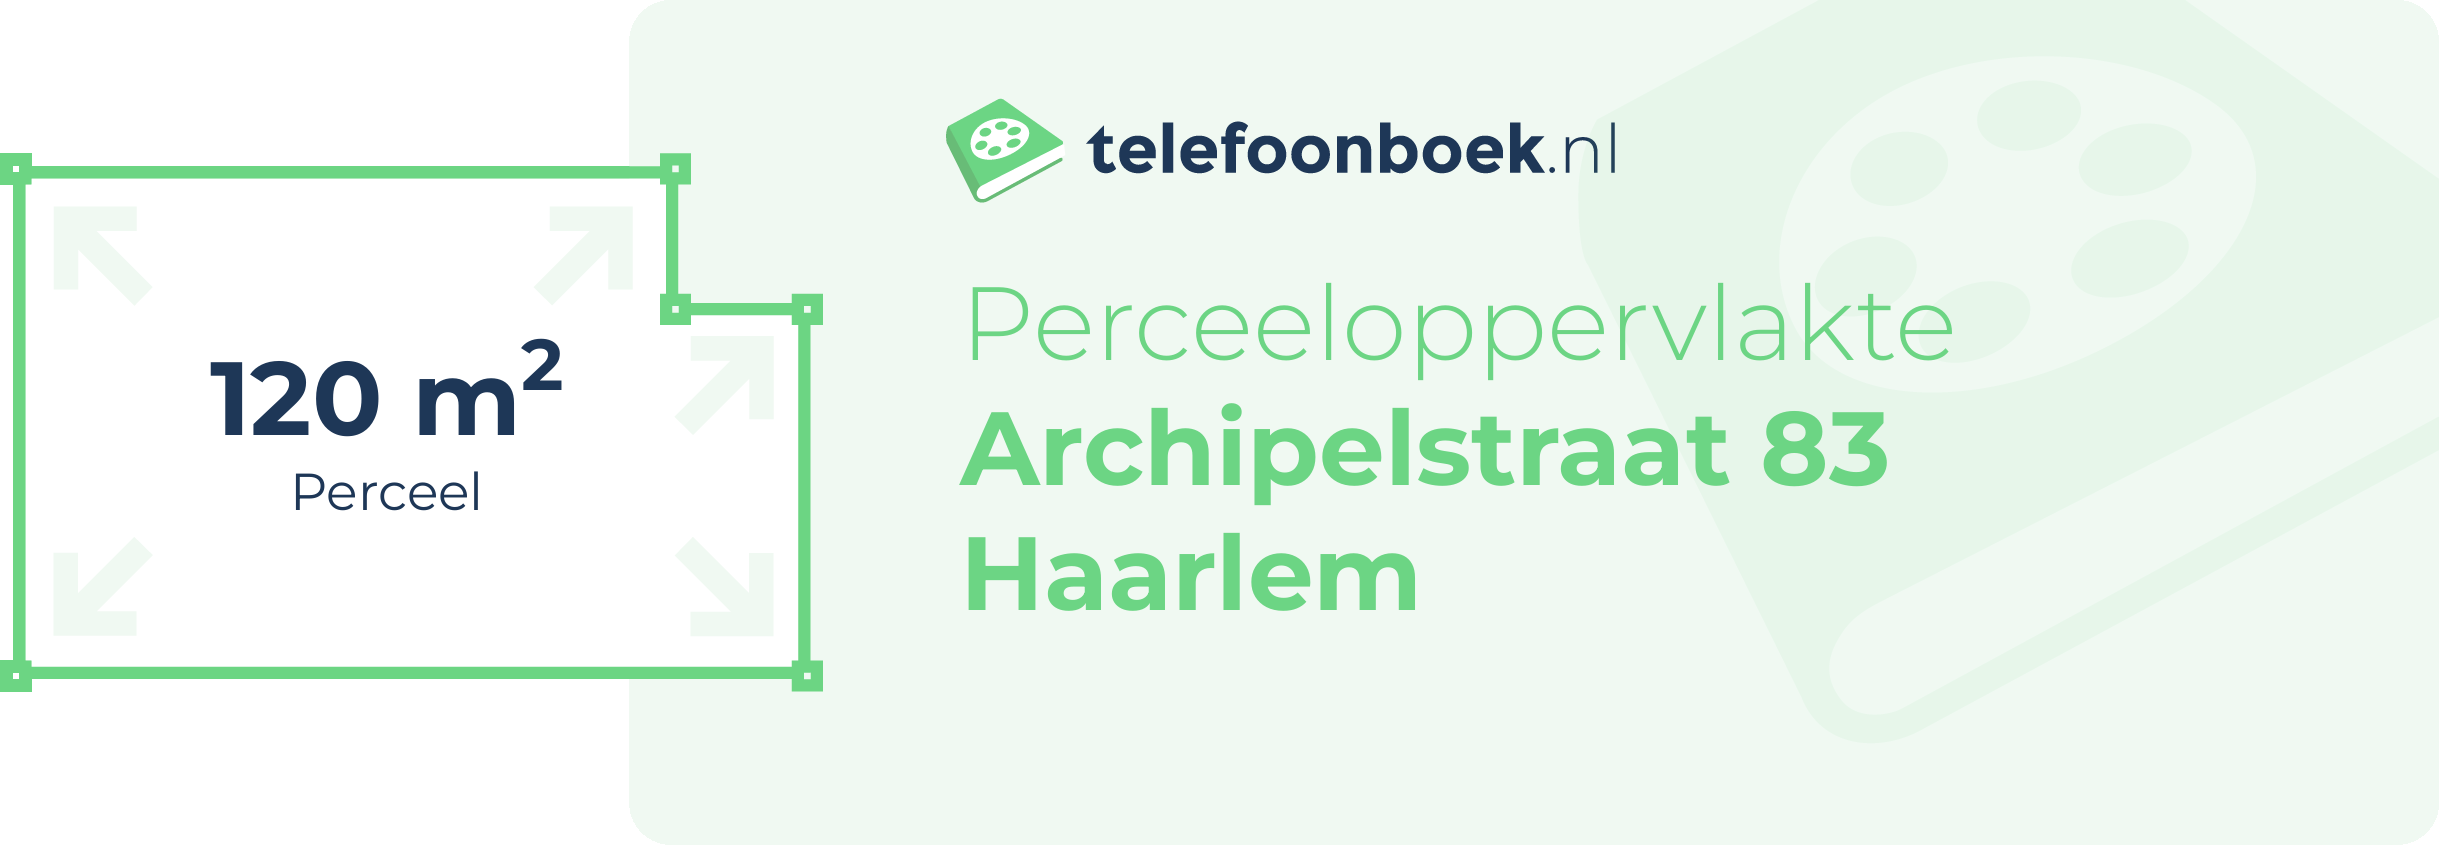 Perceeloppervlakte Archipelstraat 83 Haarlem